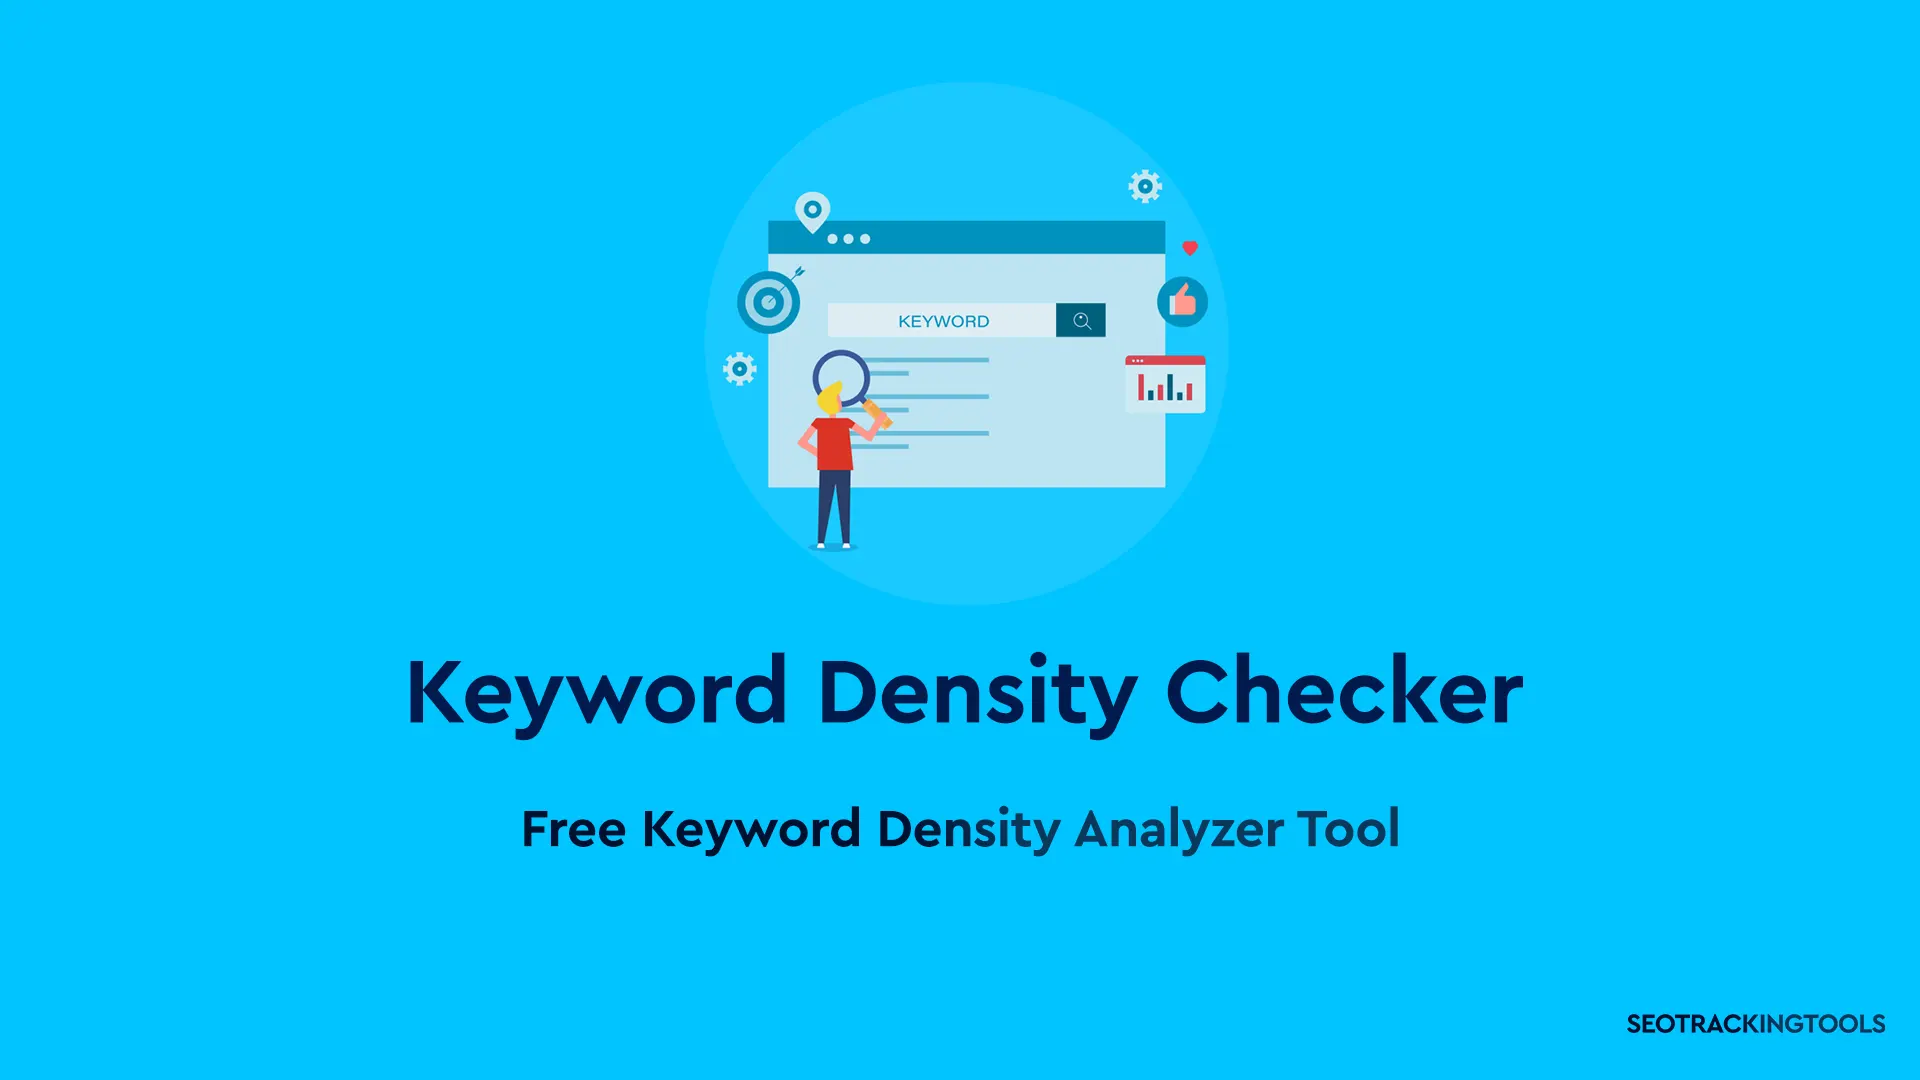 Free online keyword density checker